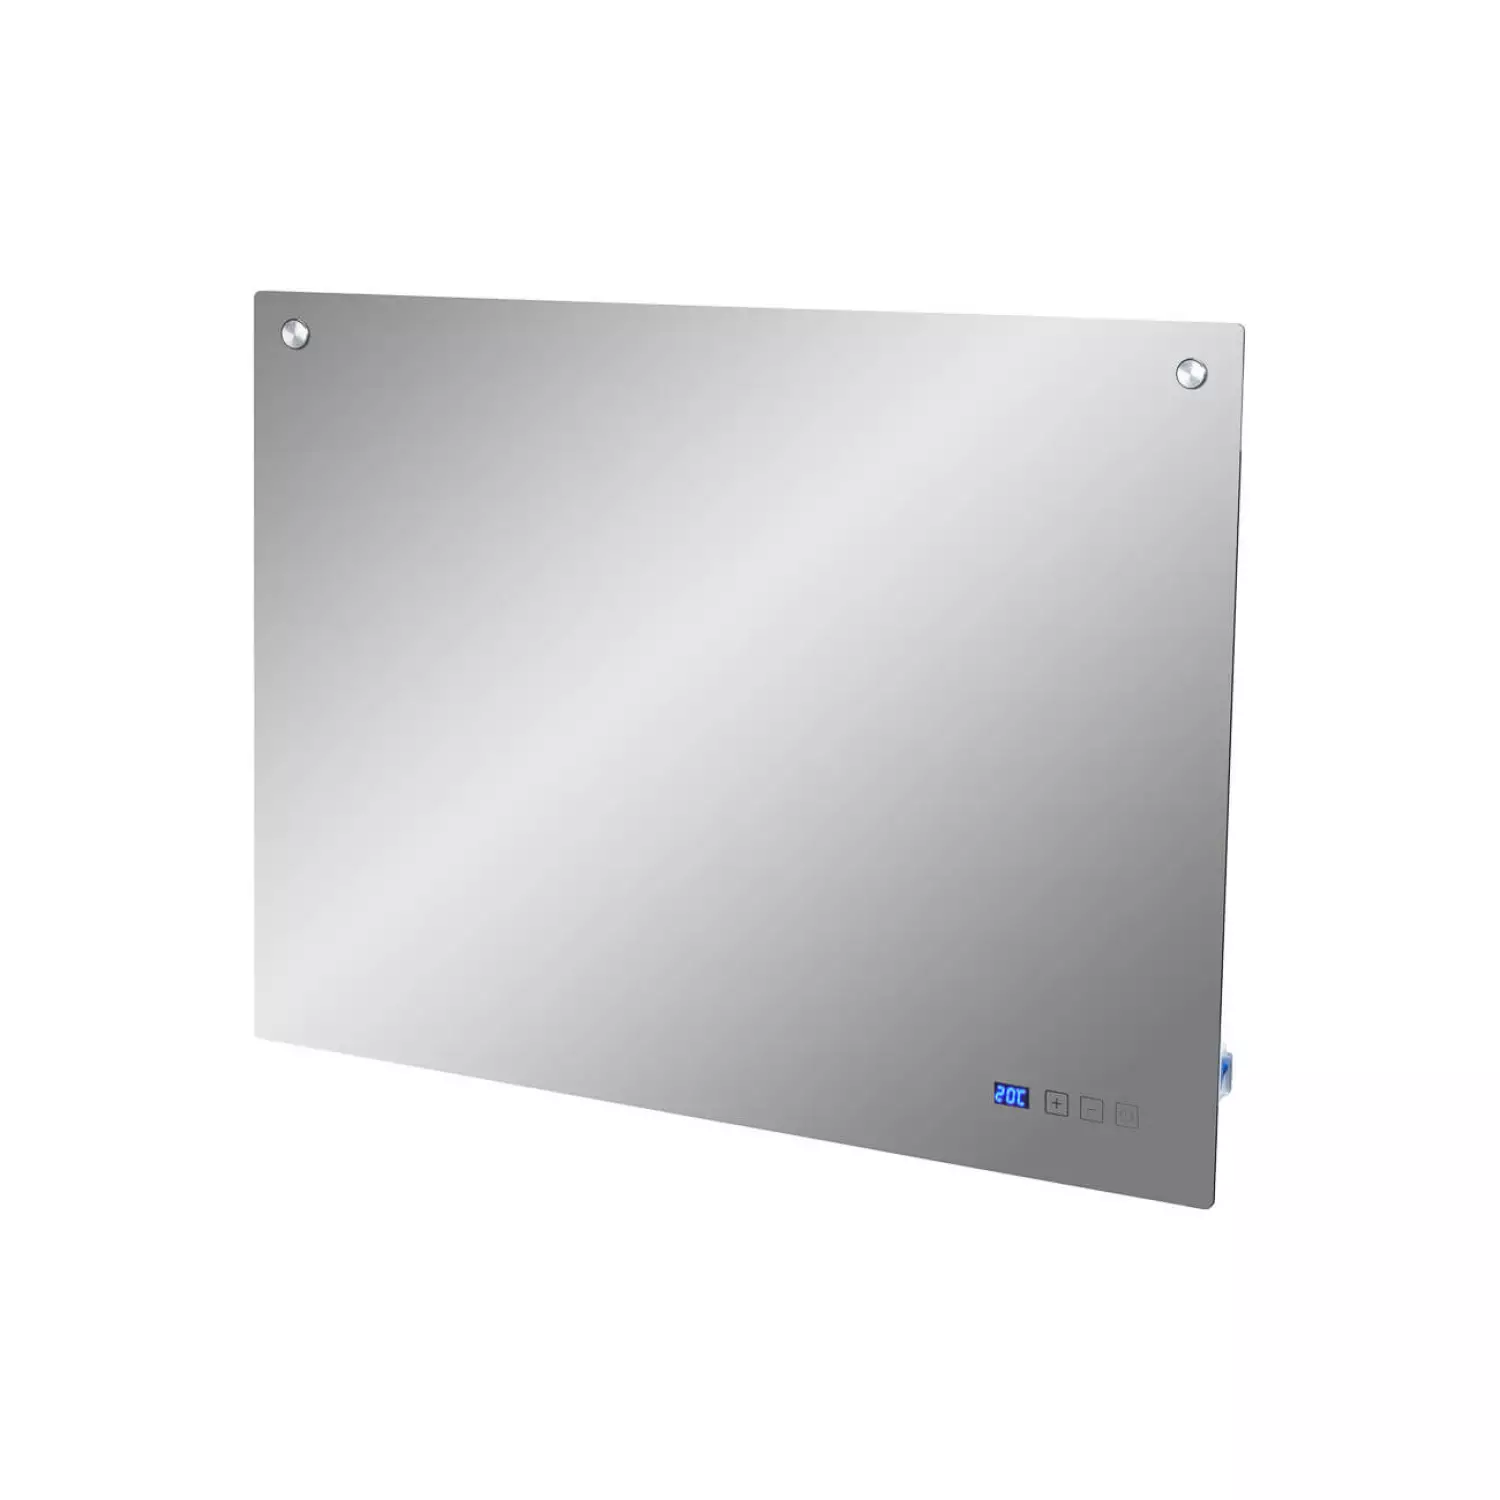 Eurom Sani 600 Mirror WiFi Infrarood paneel - 600W - 11,2 kg-image